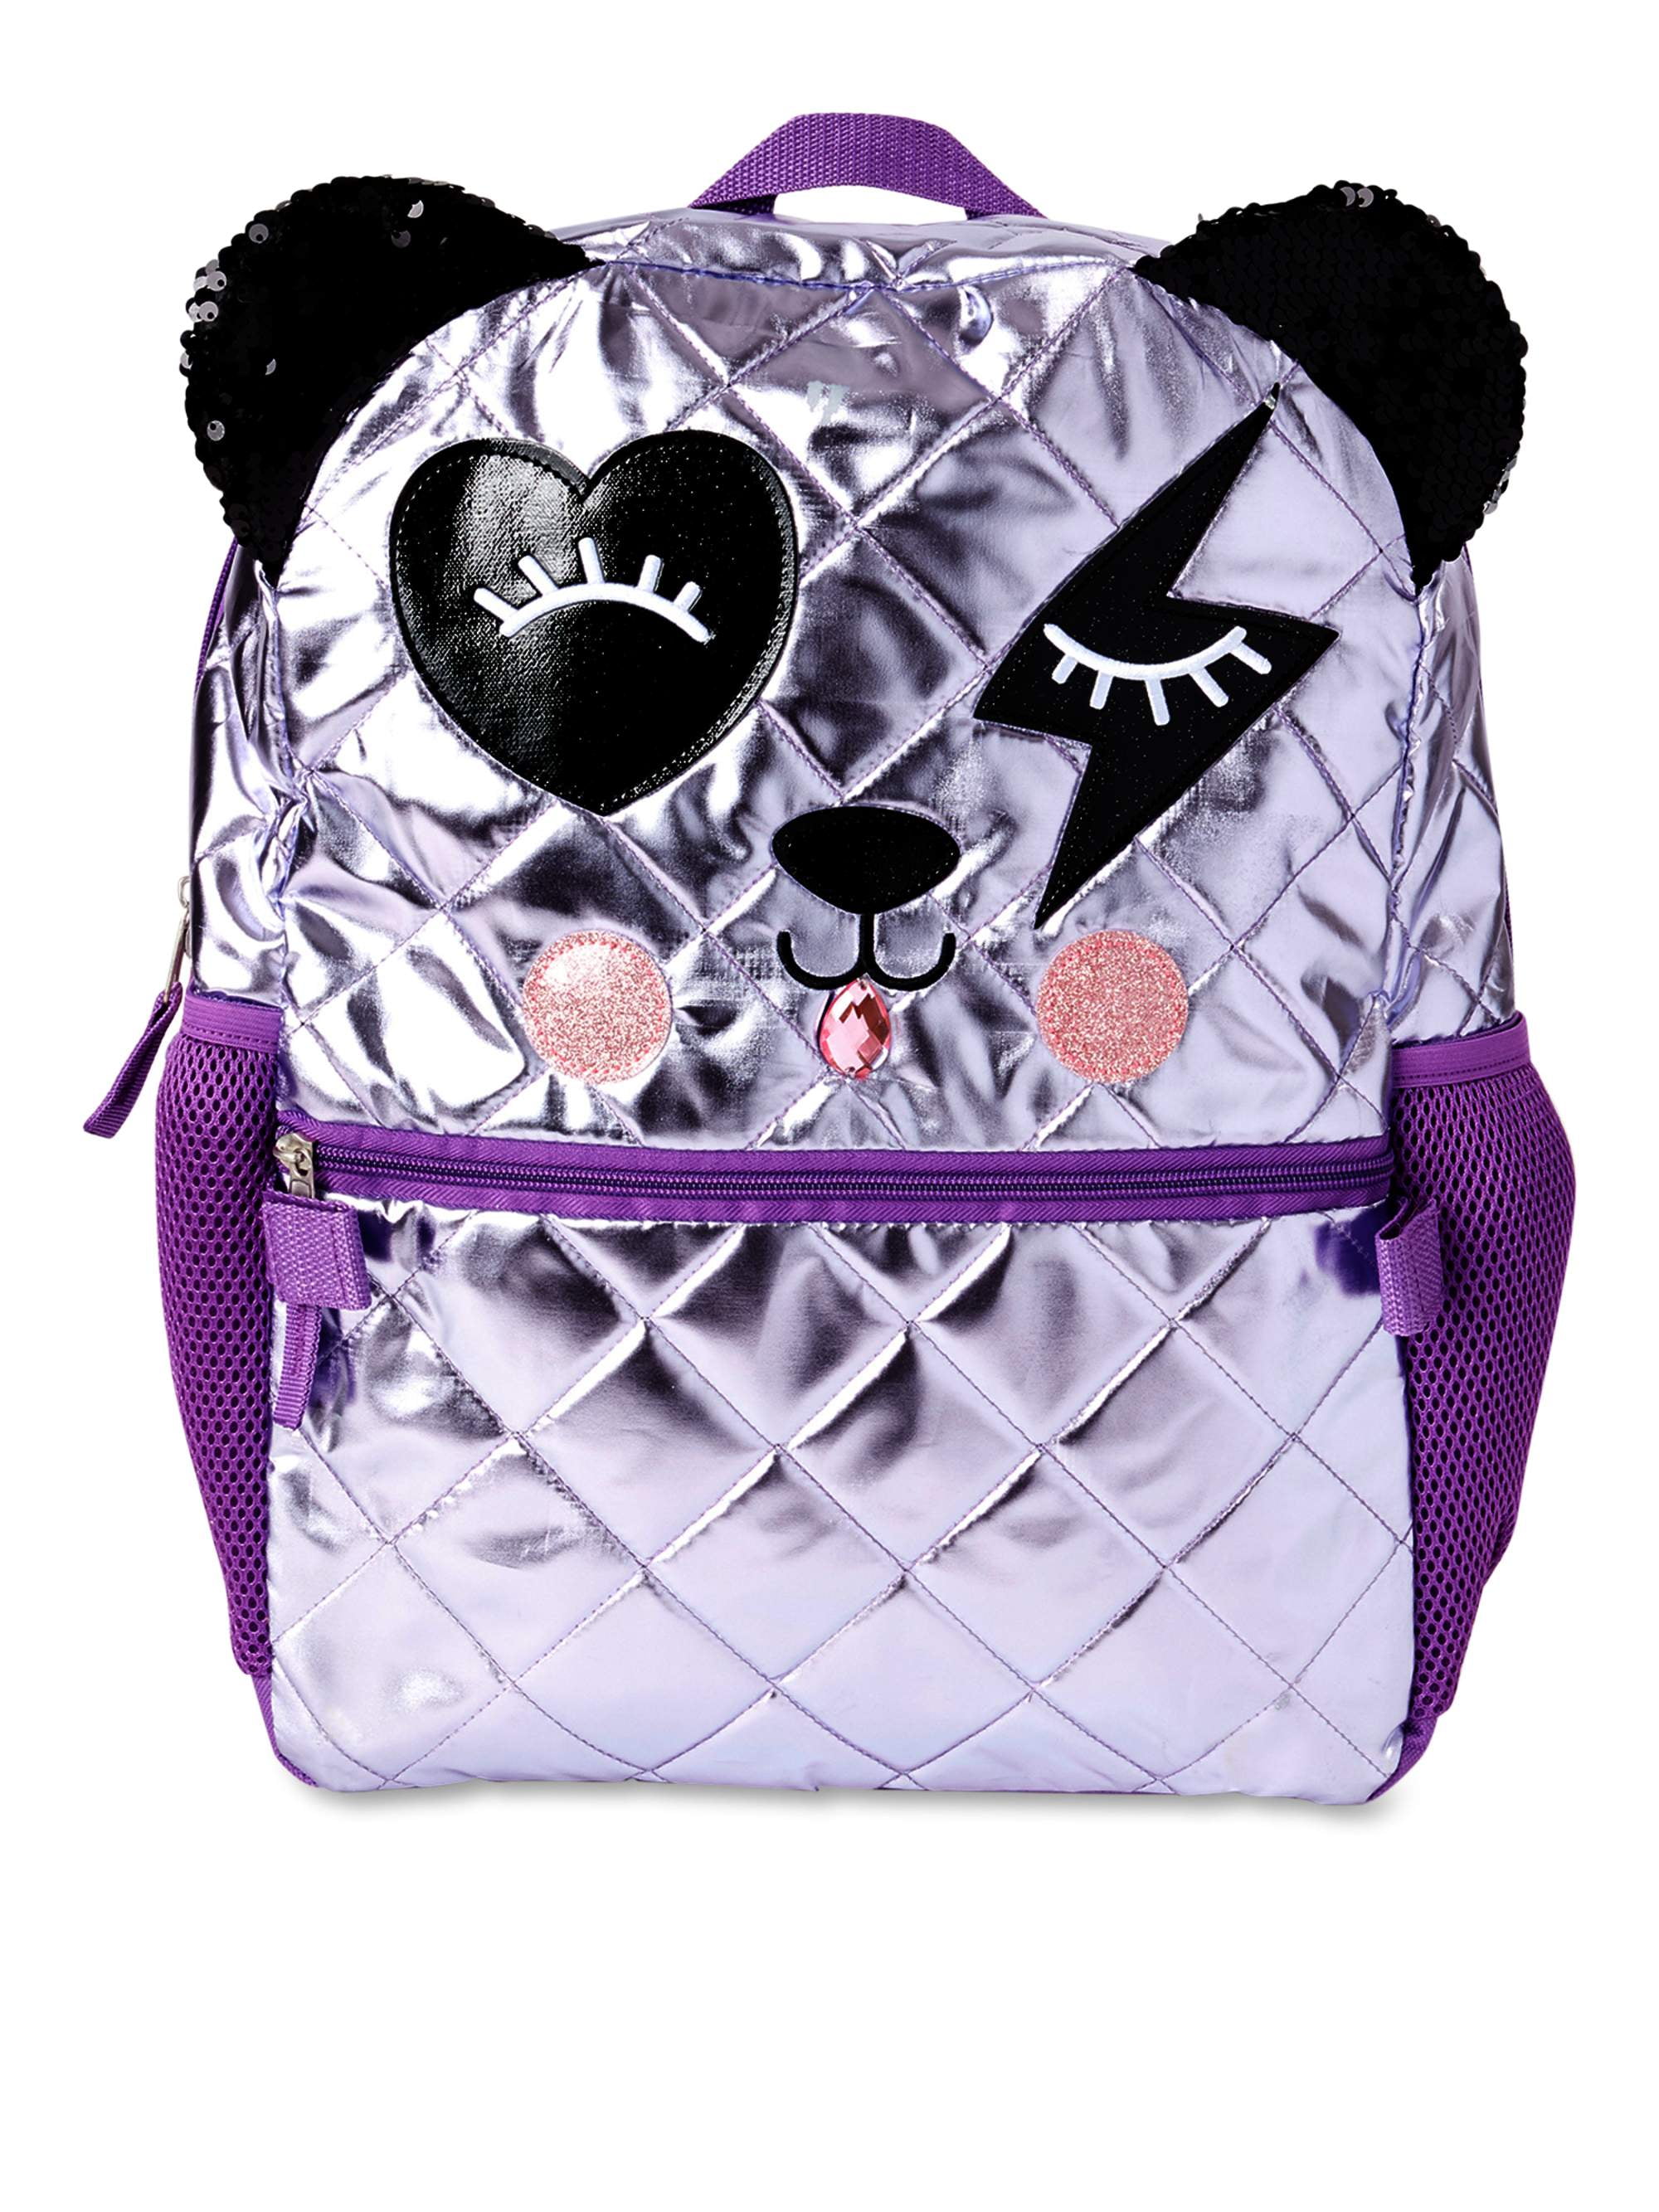 MAPOLO Panda with Triangle Things School Backpack Travel Bag Rucksack College Bookbag Travel Laptop Bag Daypack Bag for Men Women 